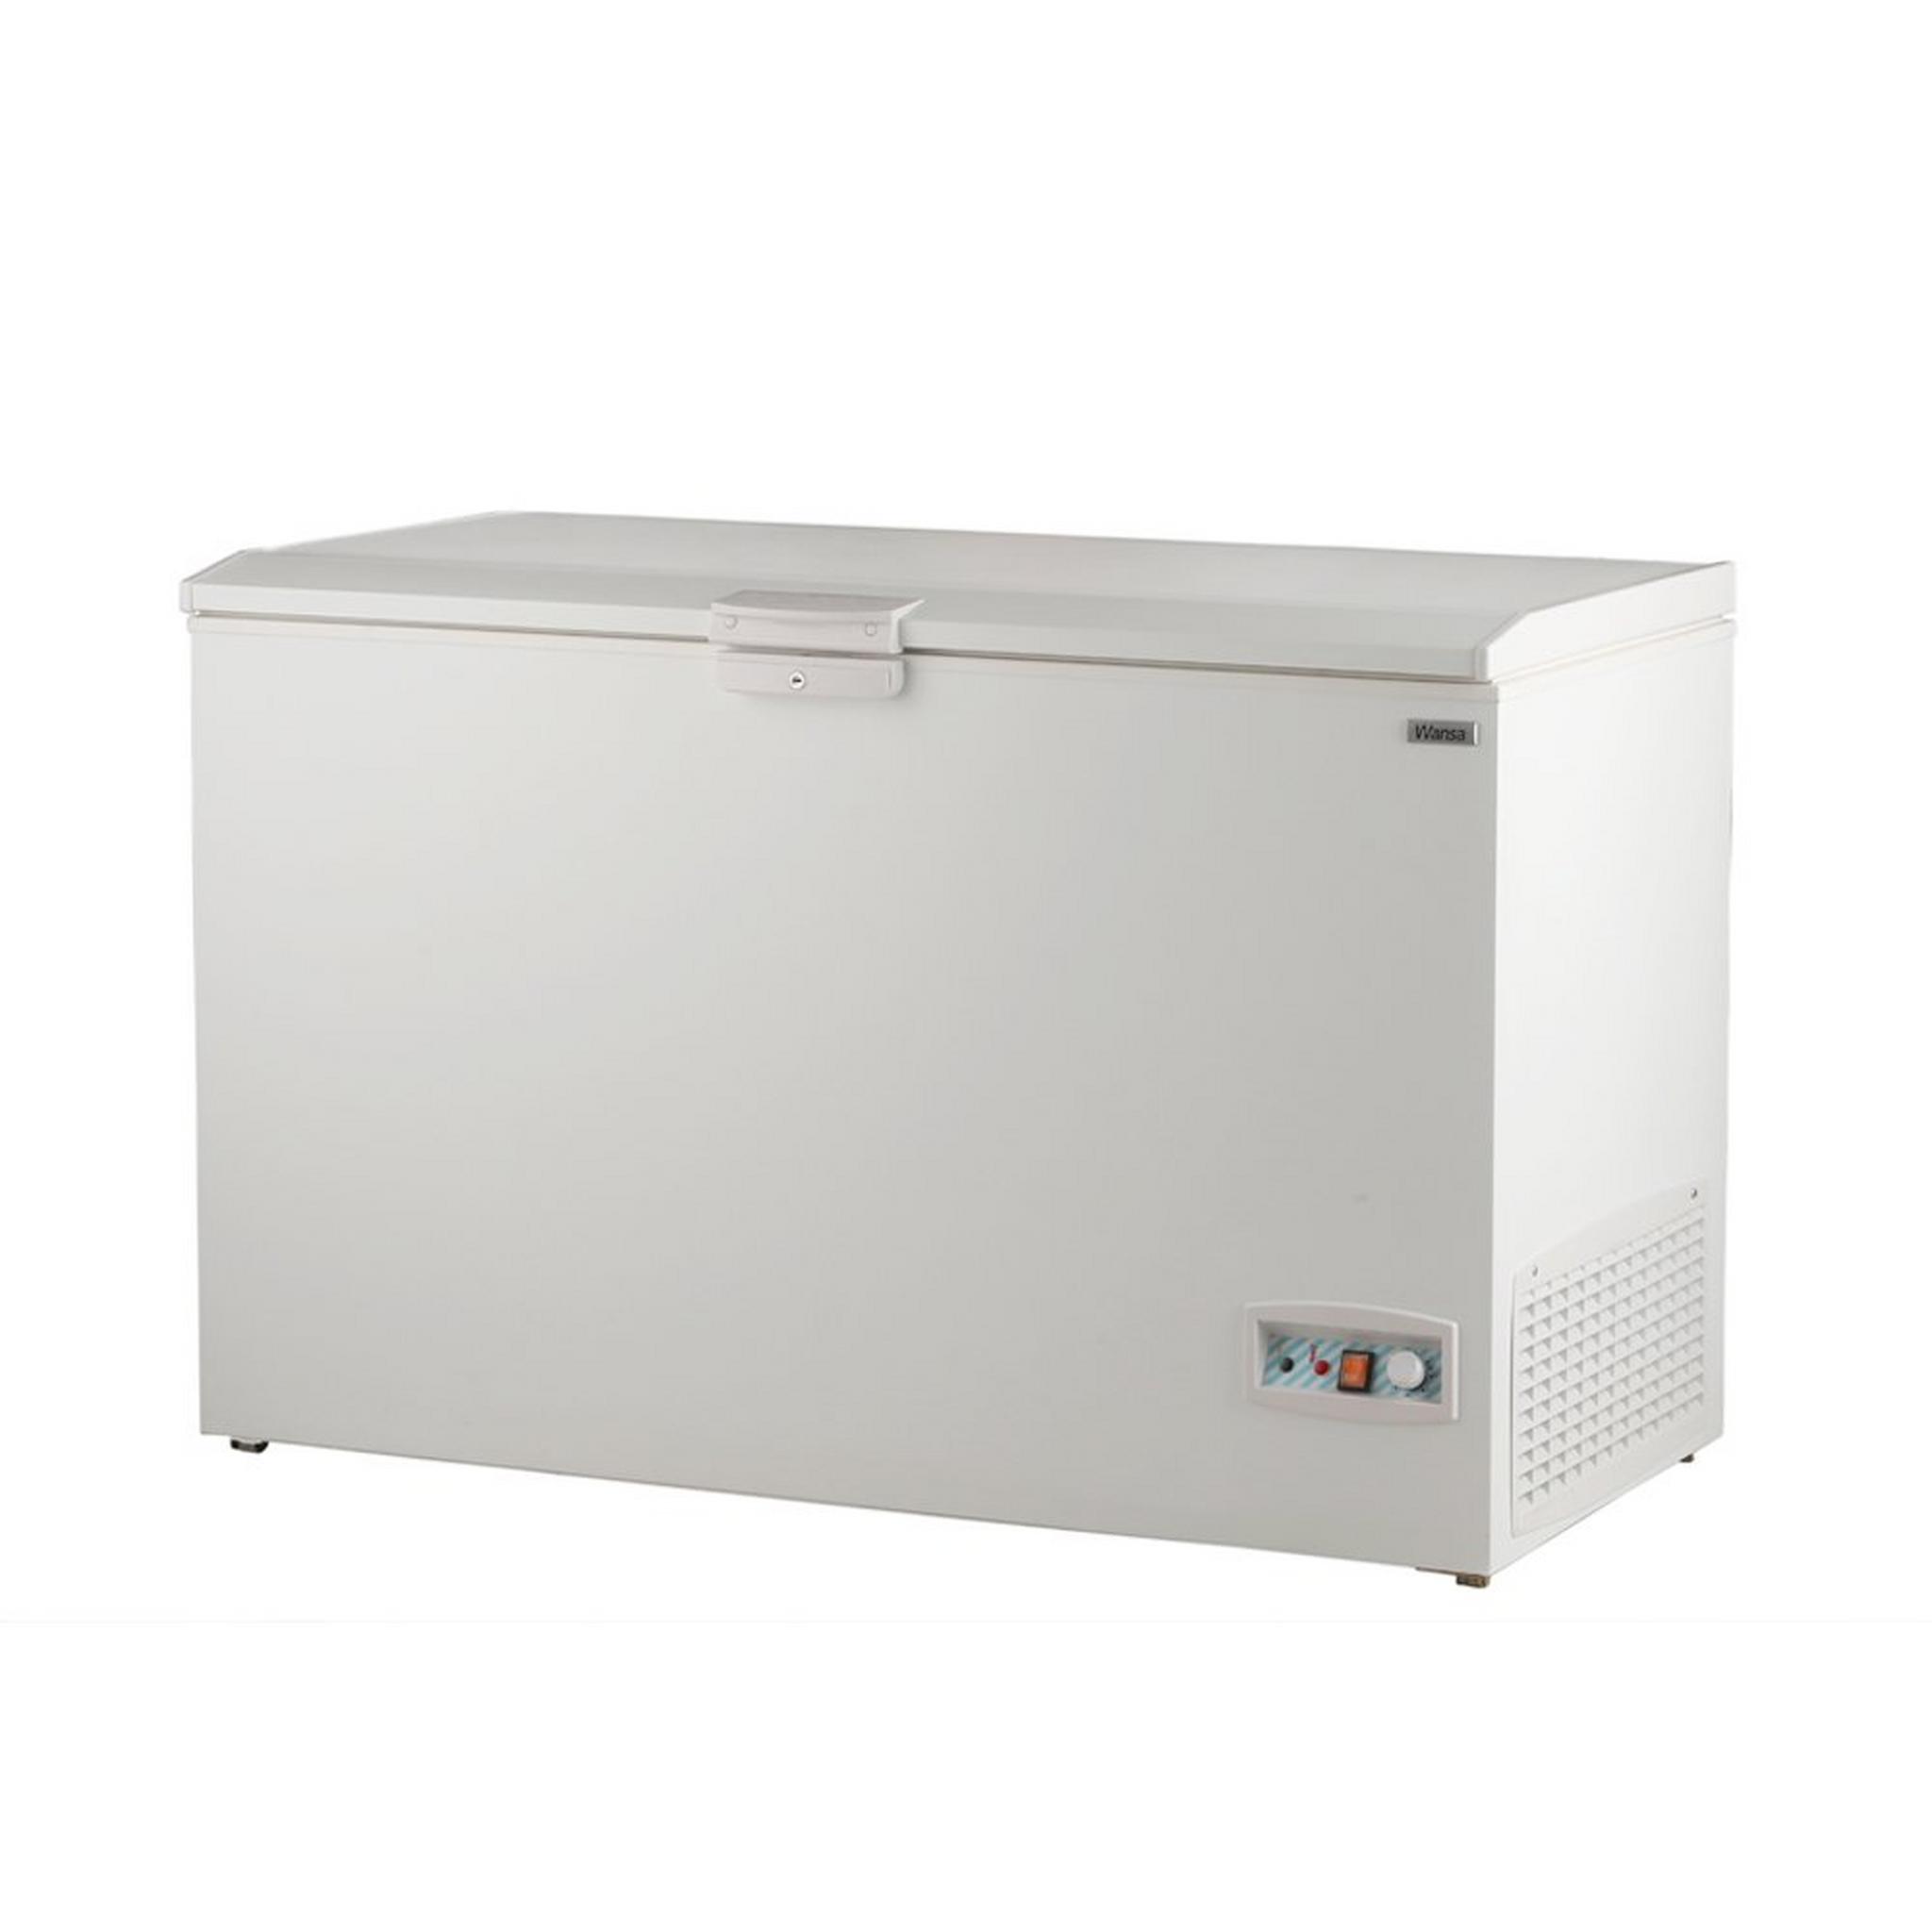 Wansa 16 Cft 1 LID Chest Freezer (WC-500-WTB92) - White